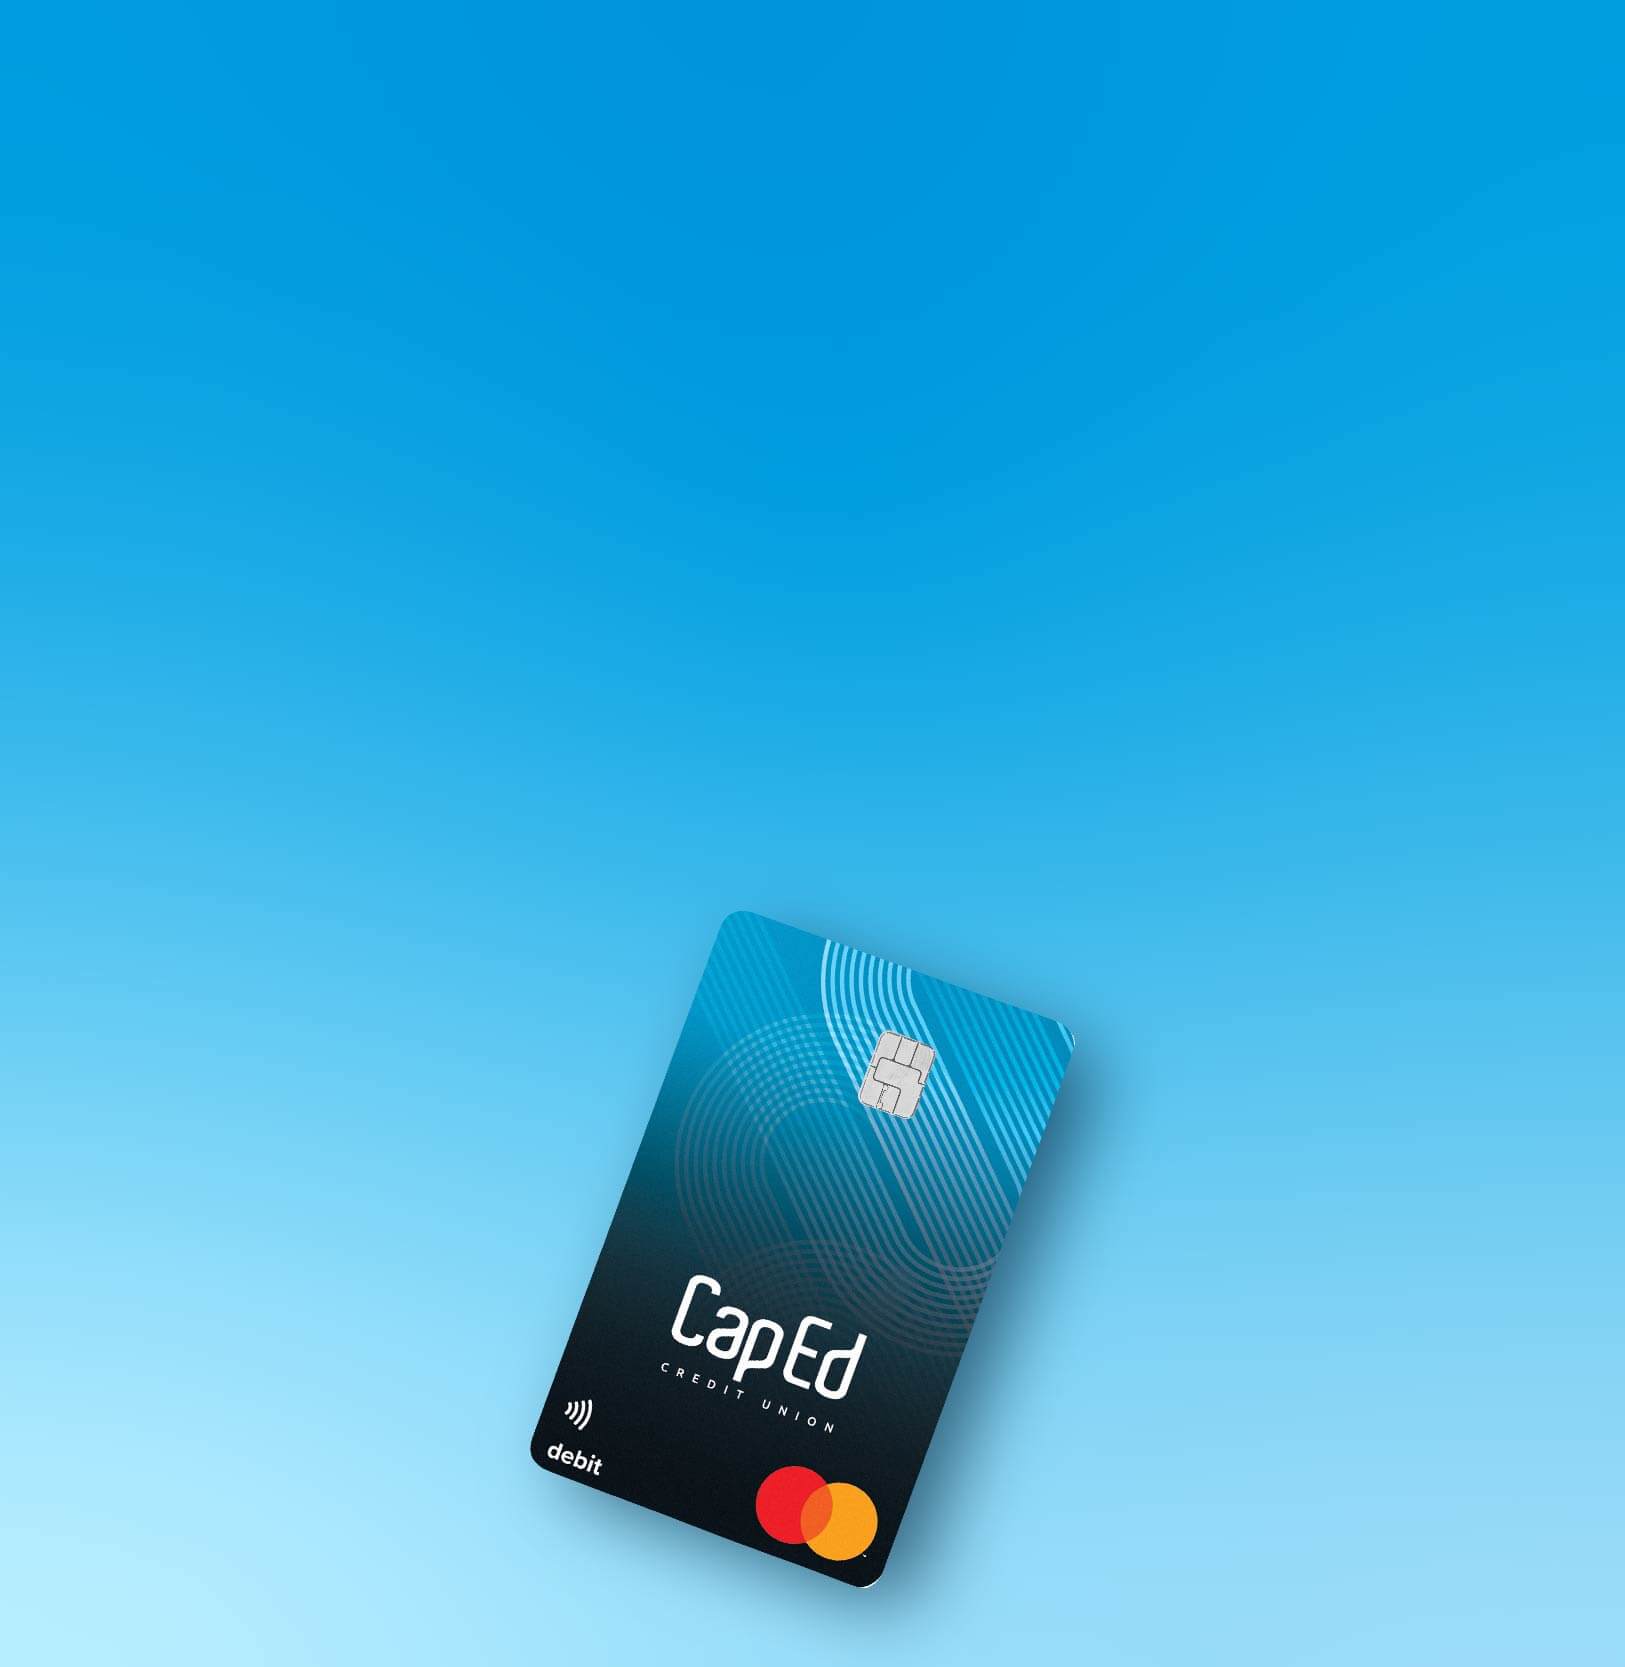 Sample of a CapEd debit Mastercard.